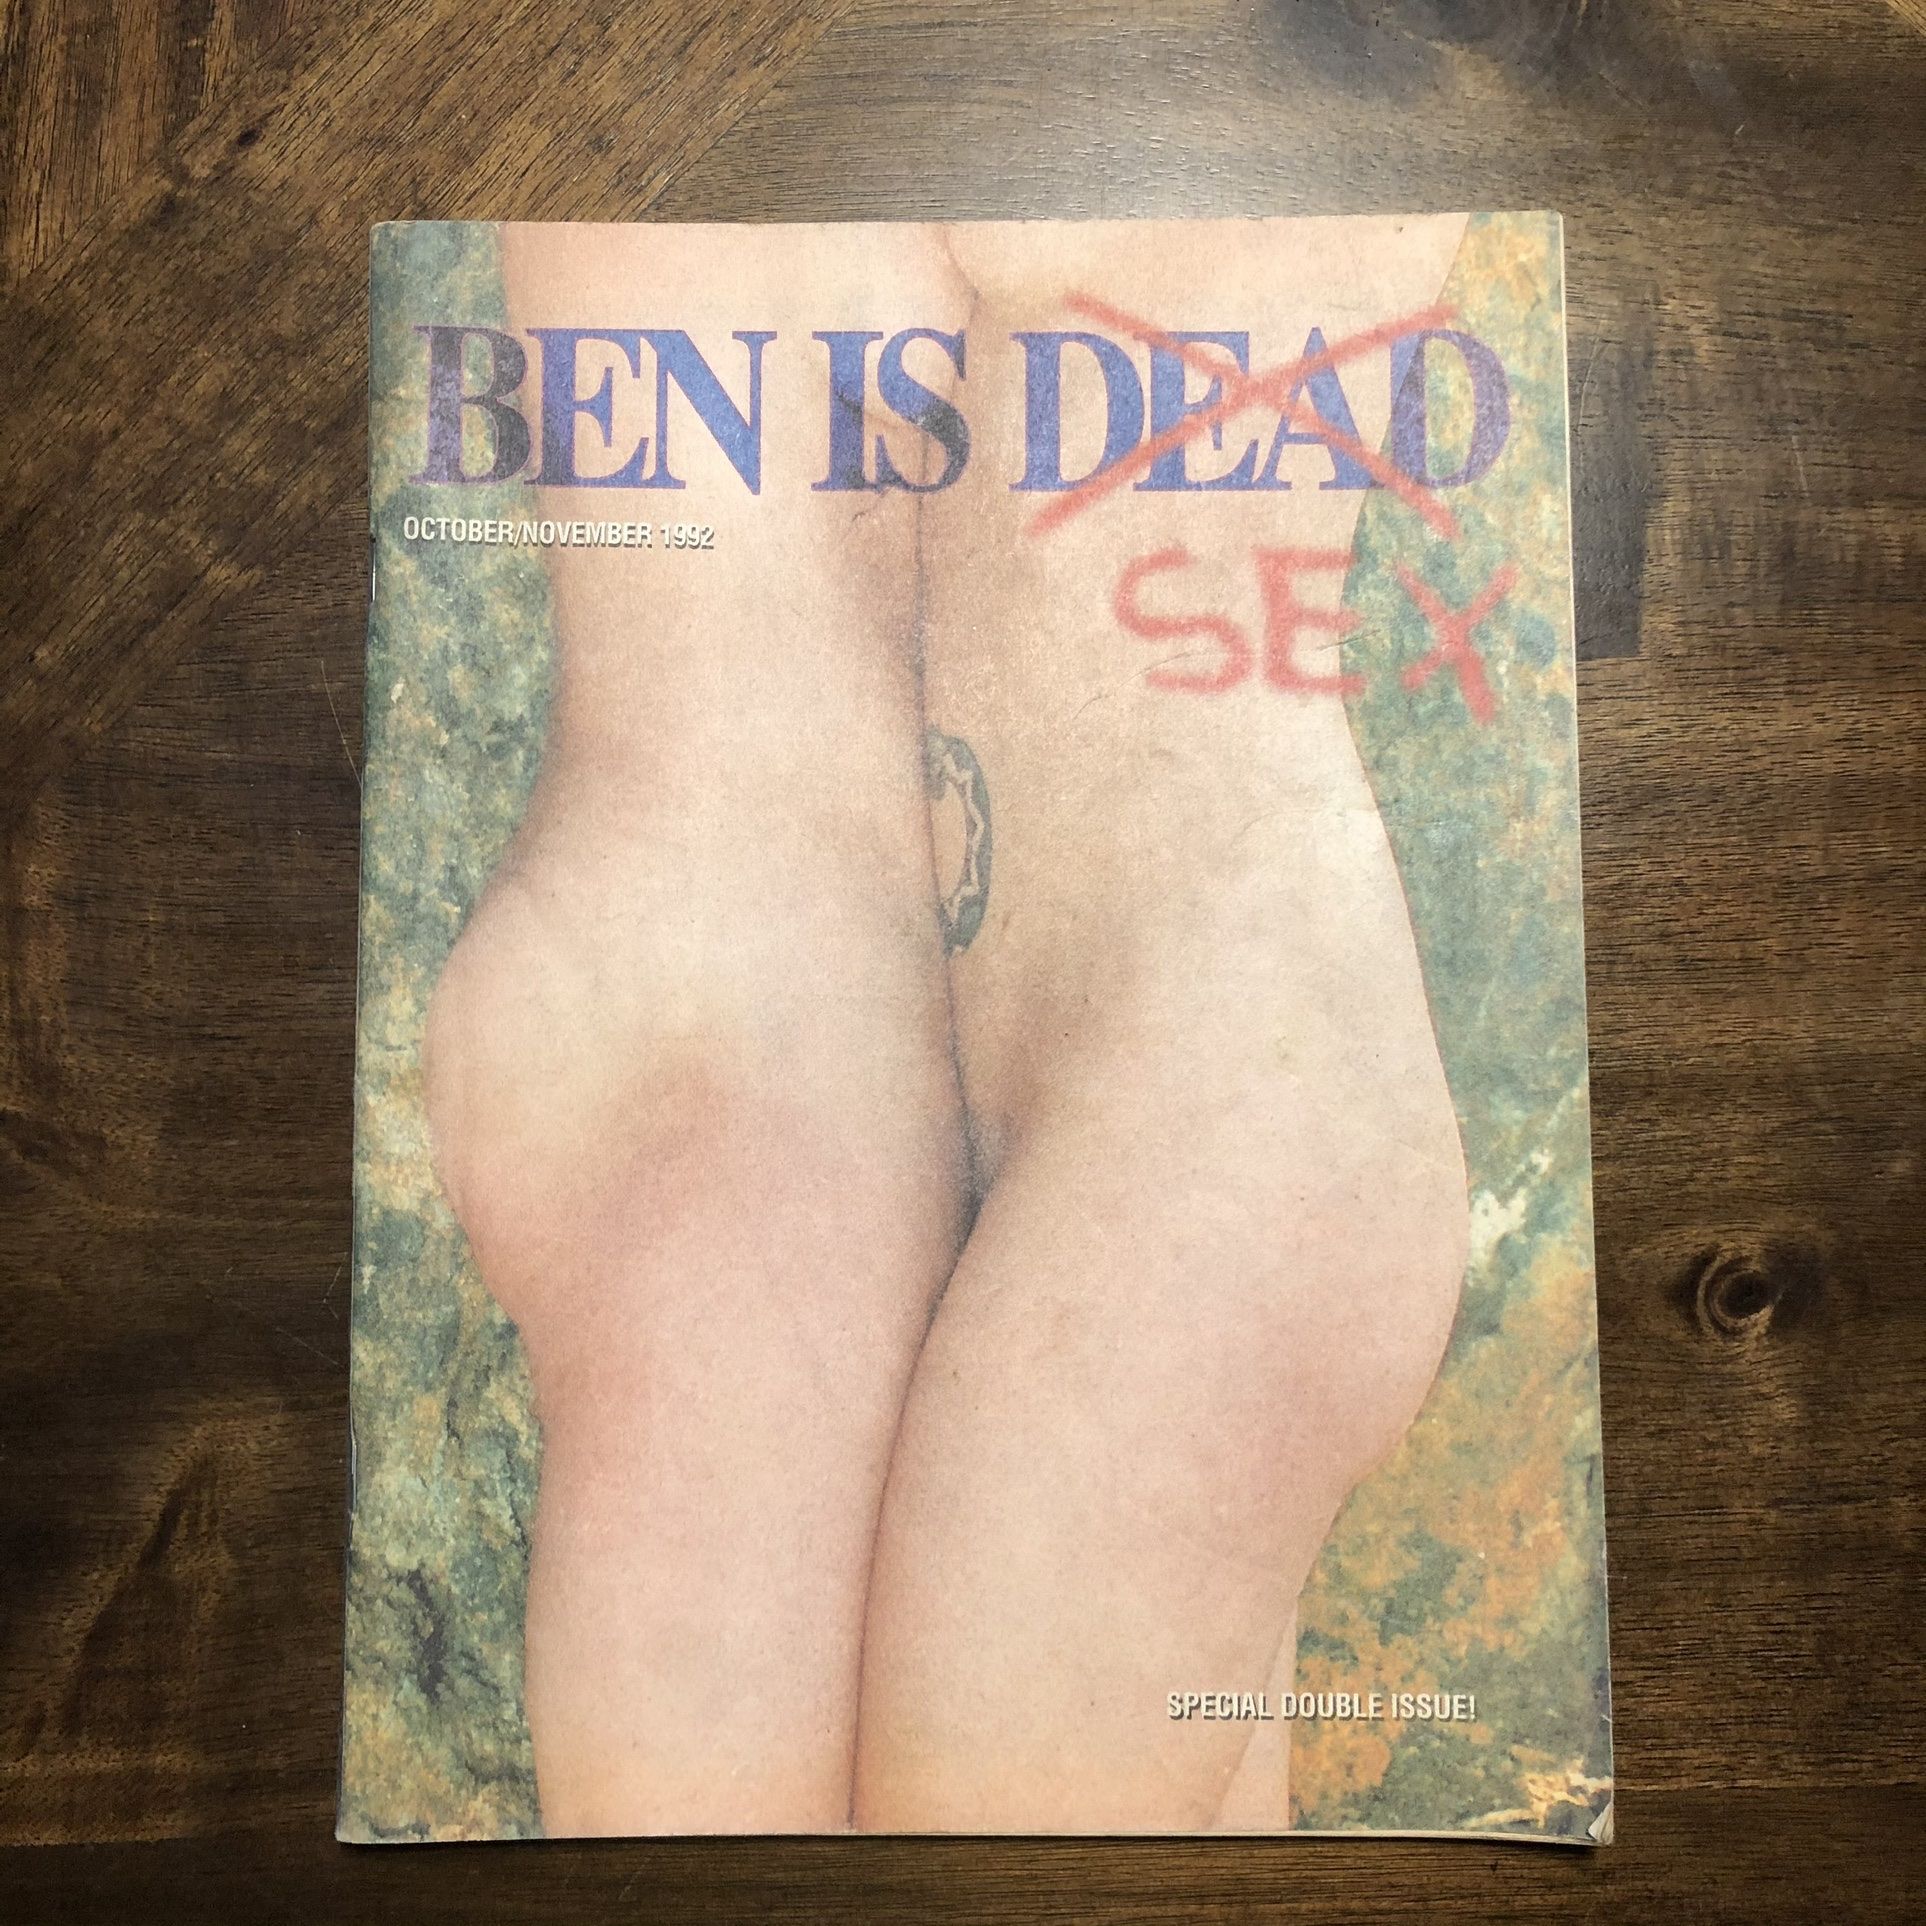 1992 Ben Is Dead (Sex) Vol 20/21 Double Issue LA Punk Rock Zine